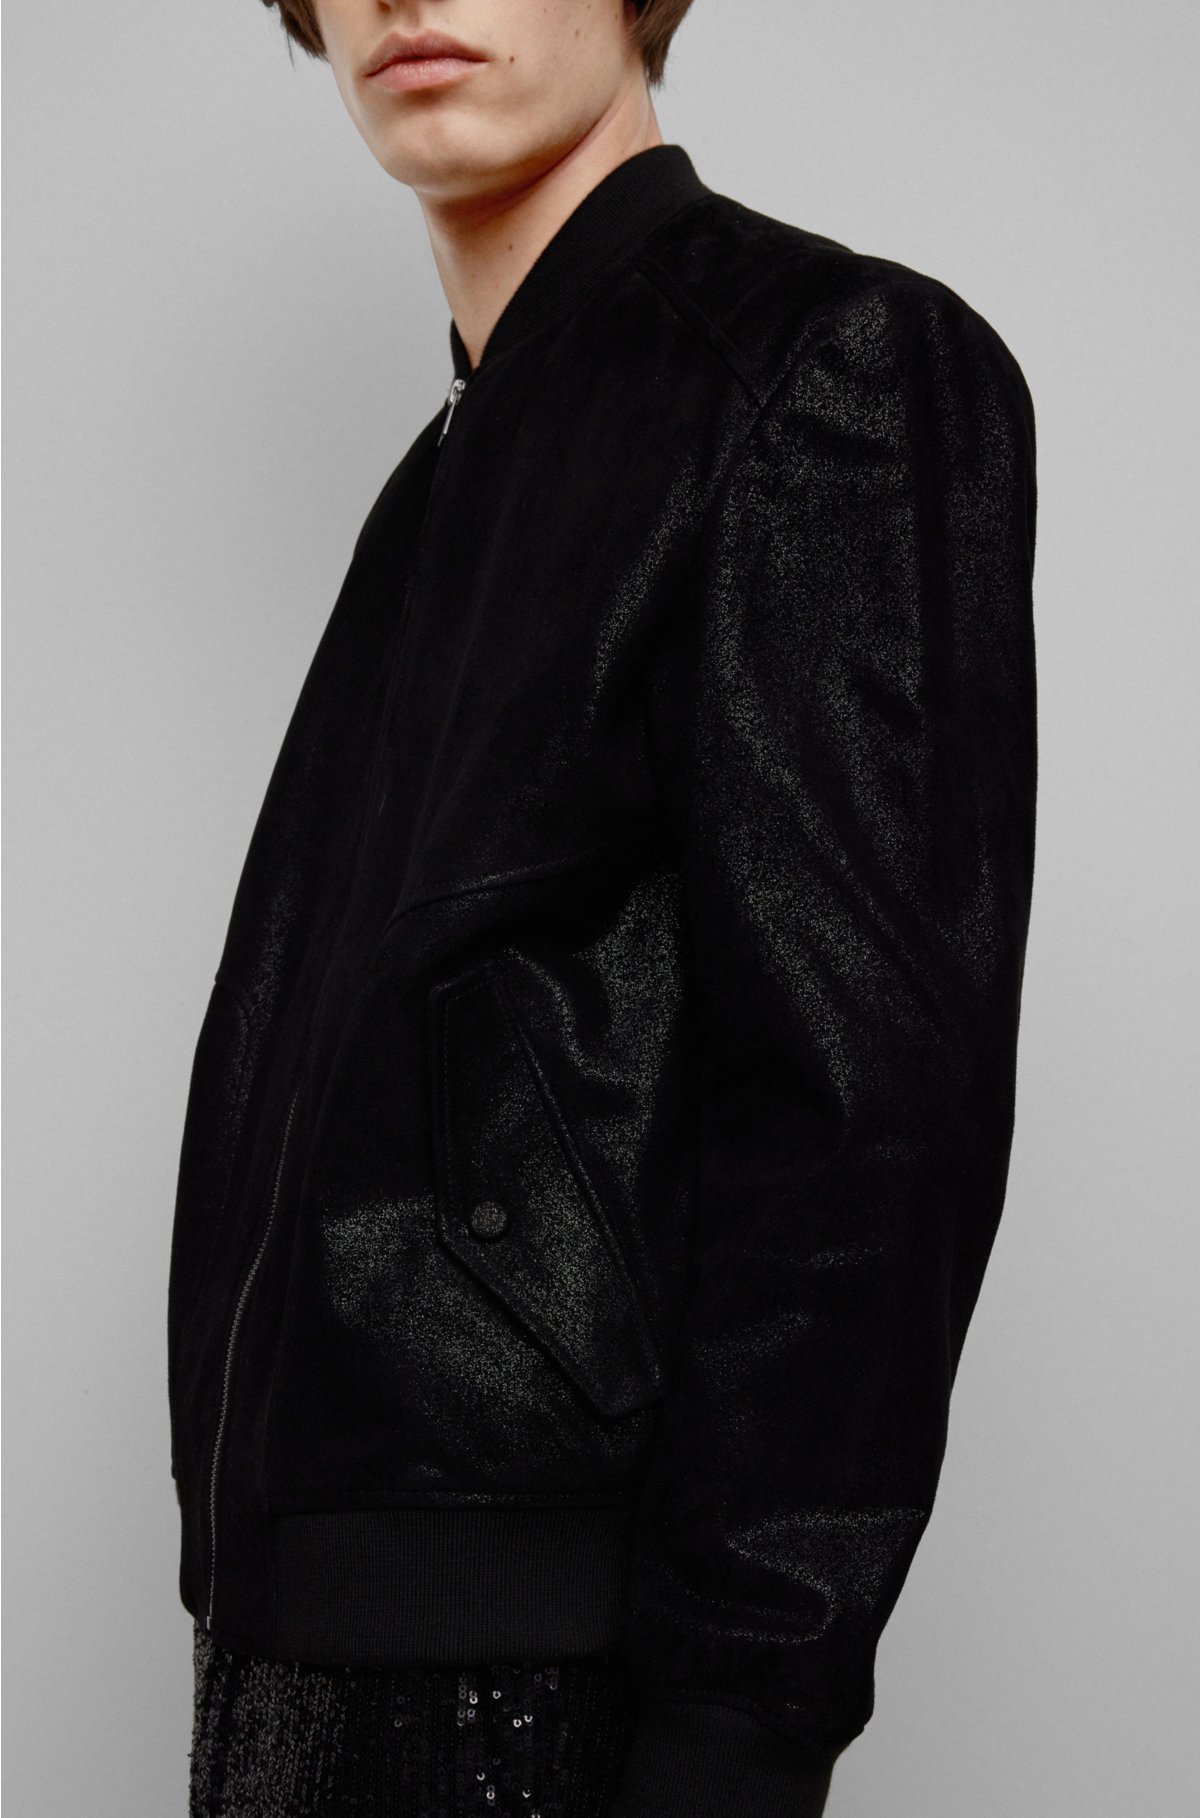 HUGO - Logo-studded leather jacket with detachable sleeves